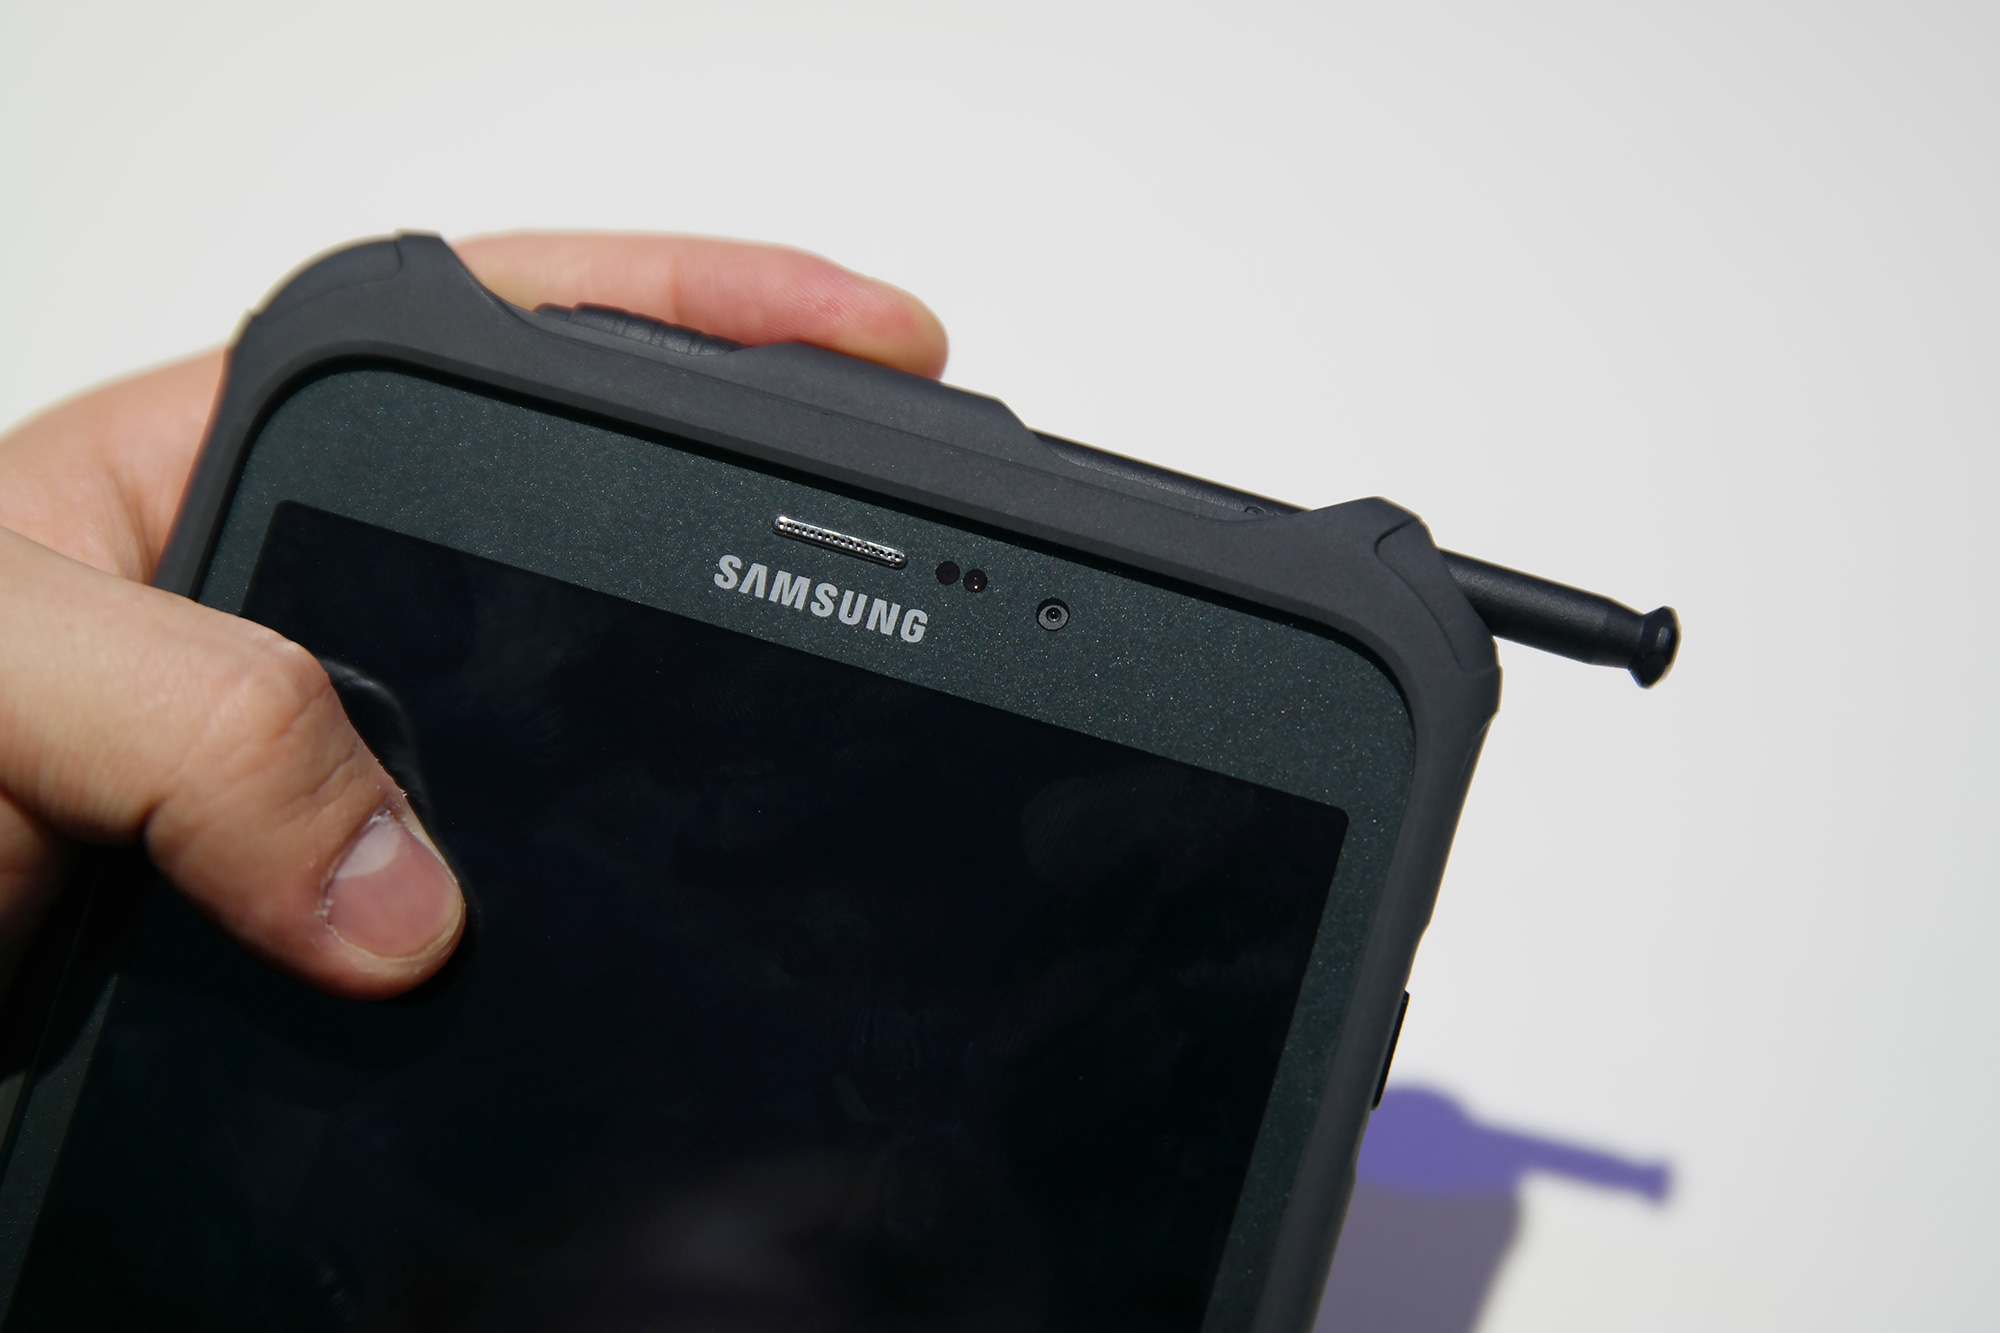 Samsung Galaxy Tab Active 8.0